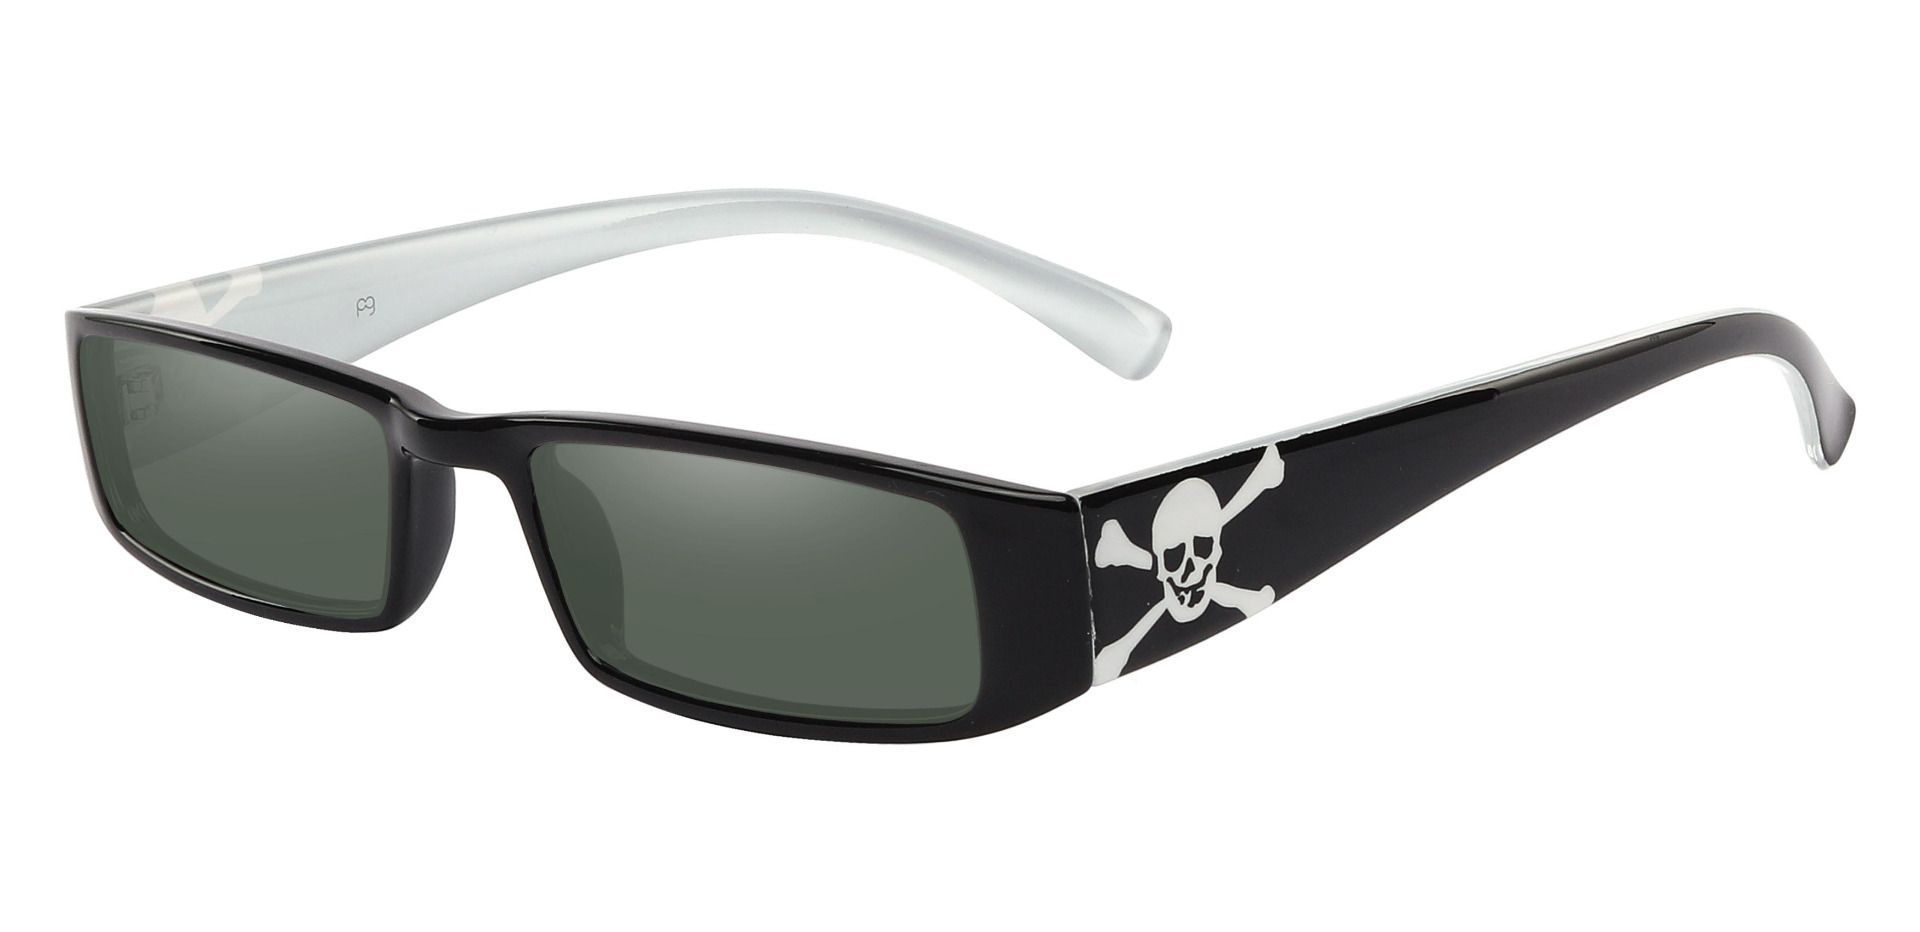 Buccaneer Rectangle Single Vision Sunglasses - Black Frame With Green Lenses